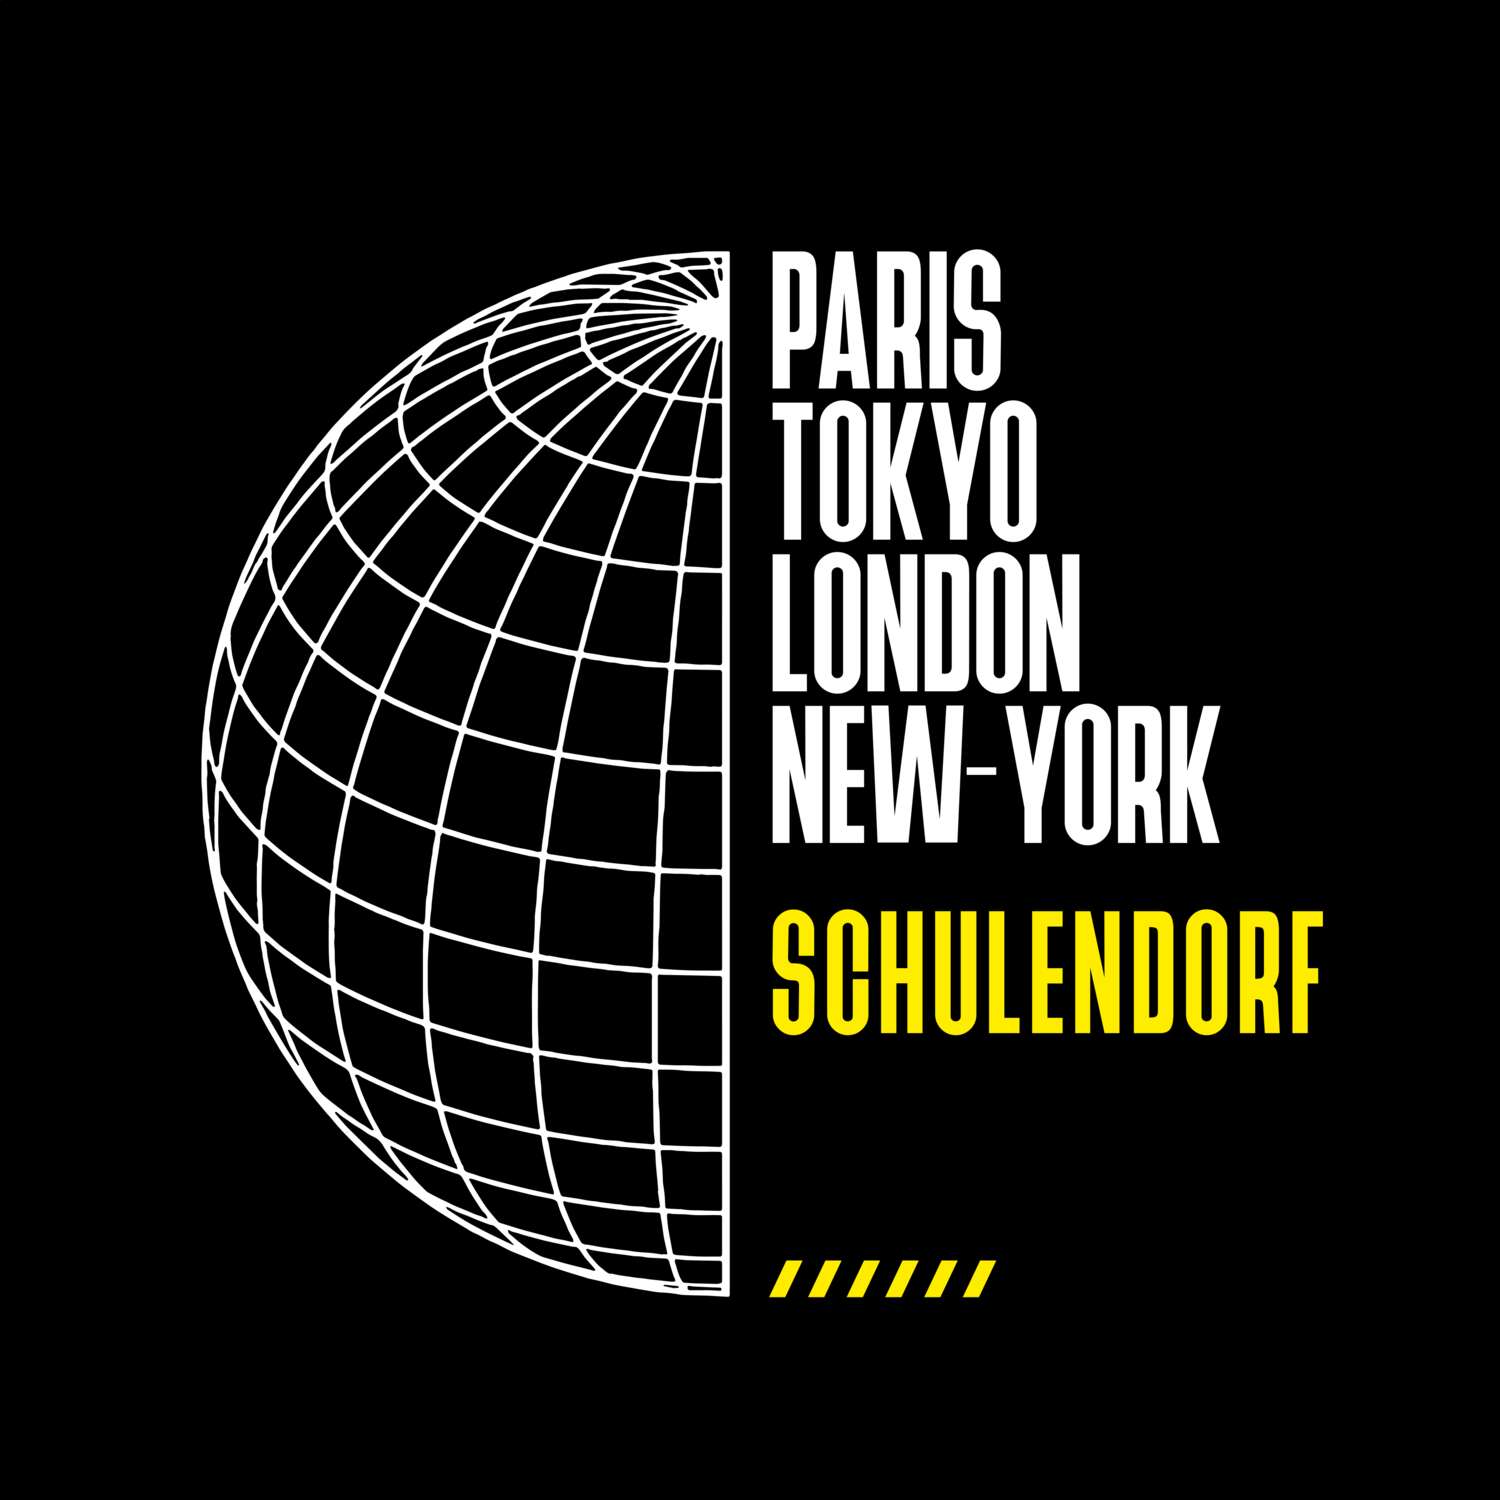 Schulendorf T-Shirt »Paris Tokyo London«